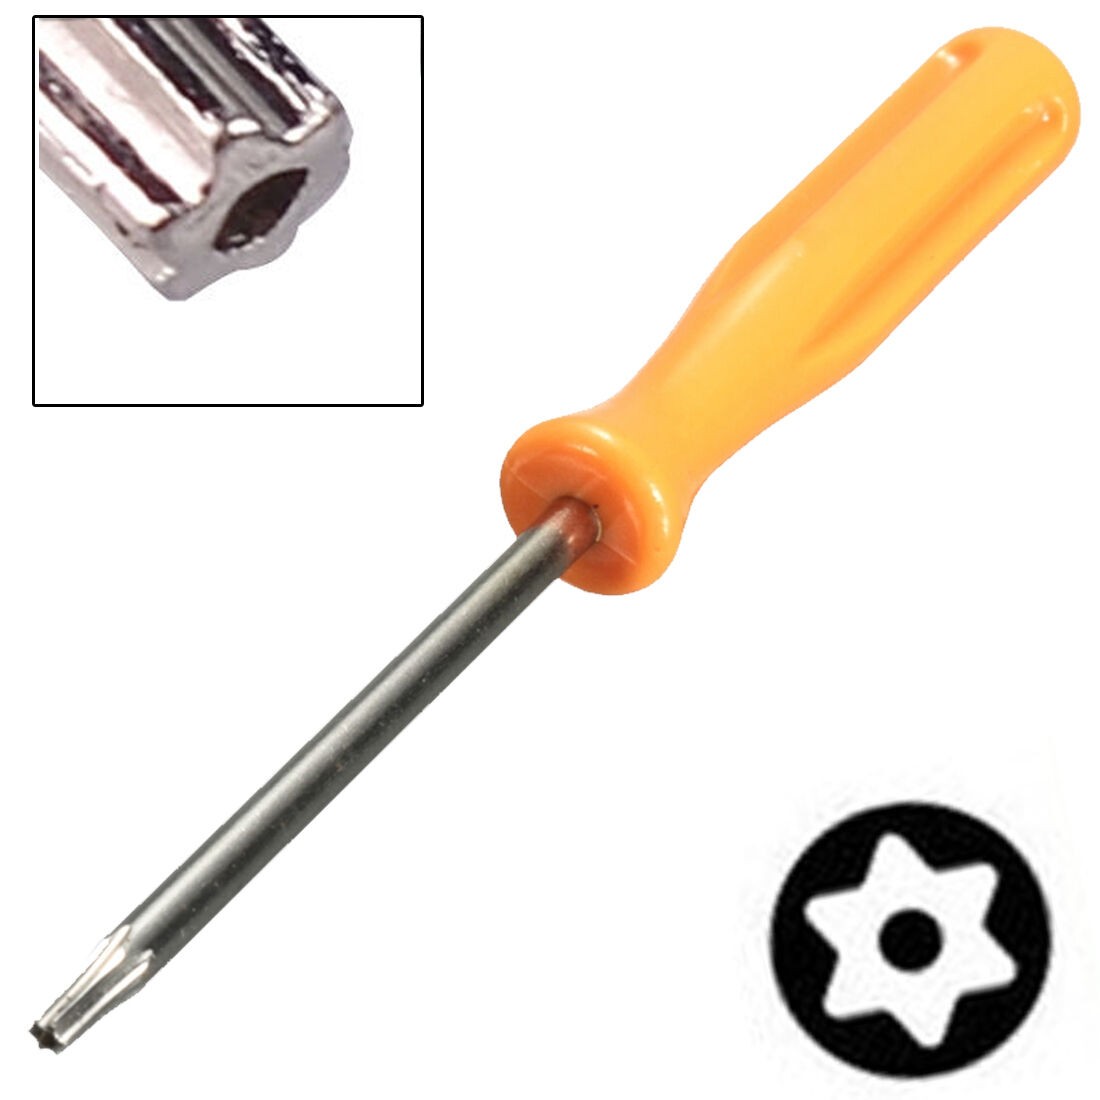 tamper proof screwdriver